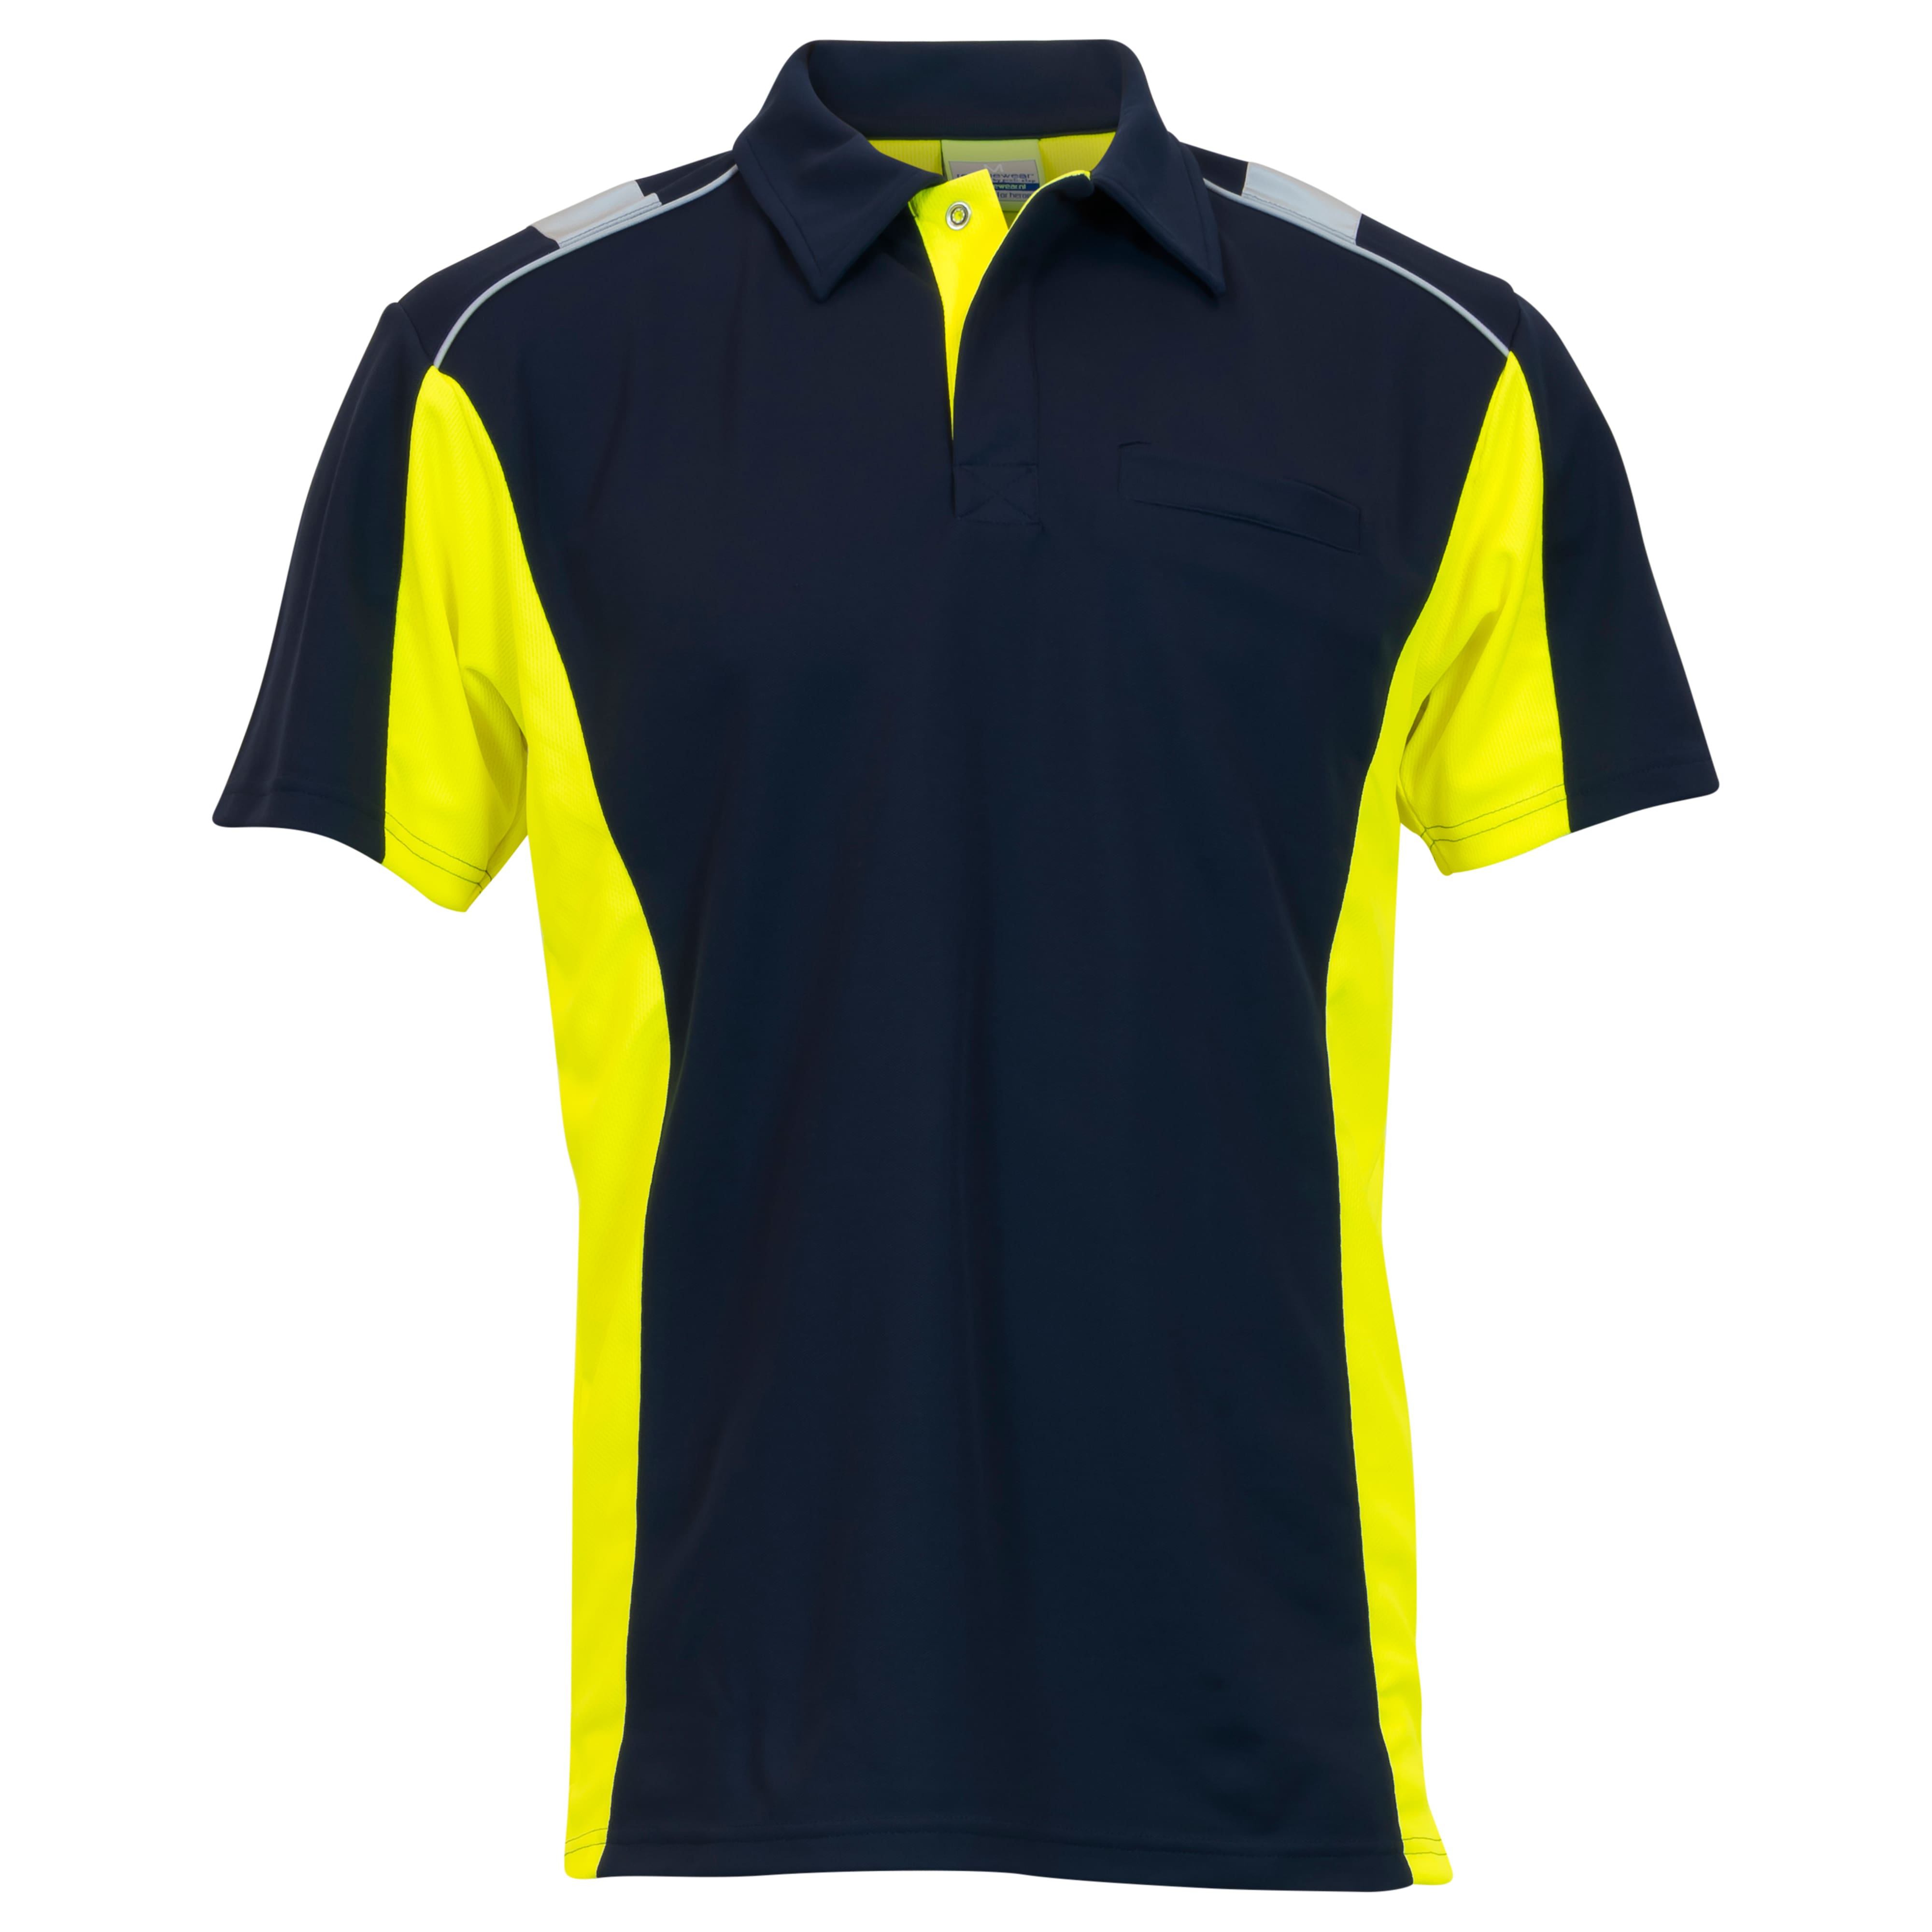 Rescuewear Poloshirt 33256 kurze Ärmel Dynamic Marineblau / Neon Gelb